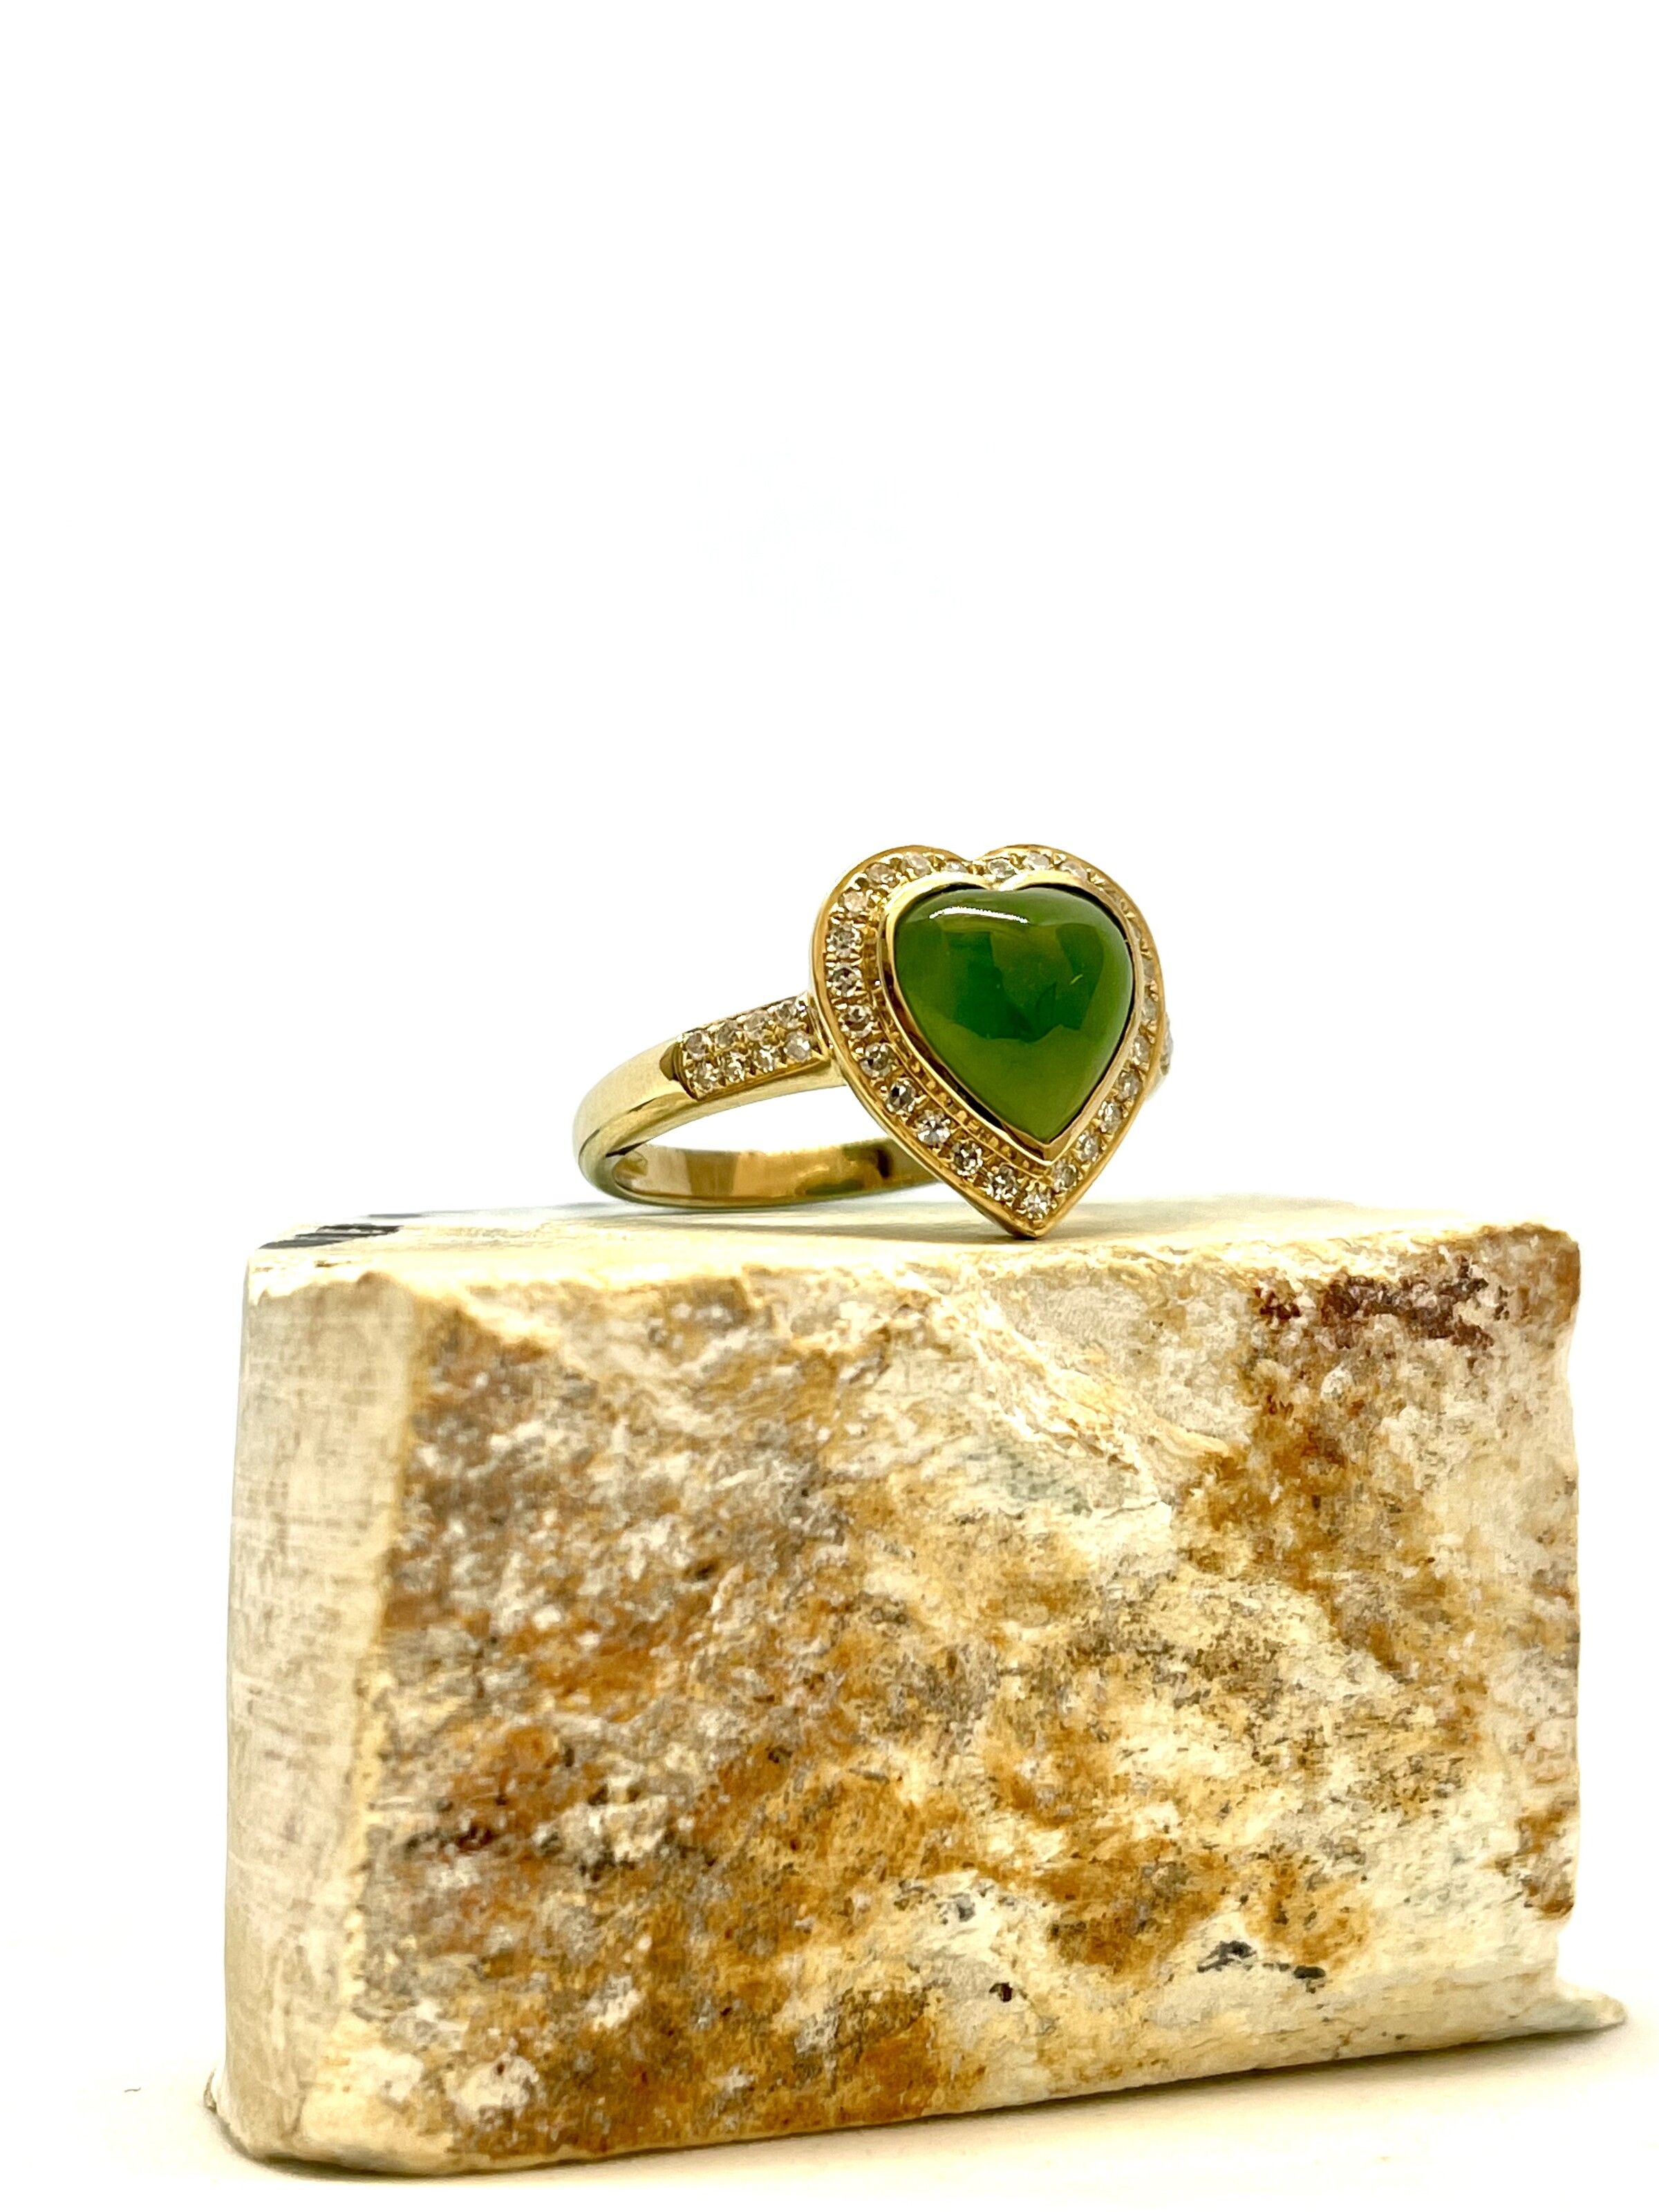 New Zealand A-grade Jade (Pounamu) &amp; 18CT Gold Heart Ring